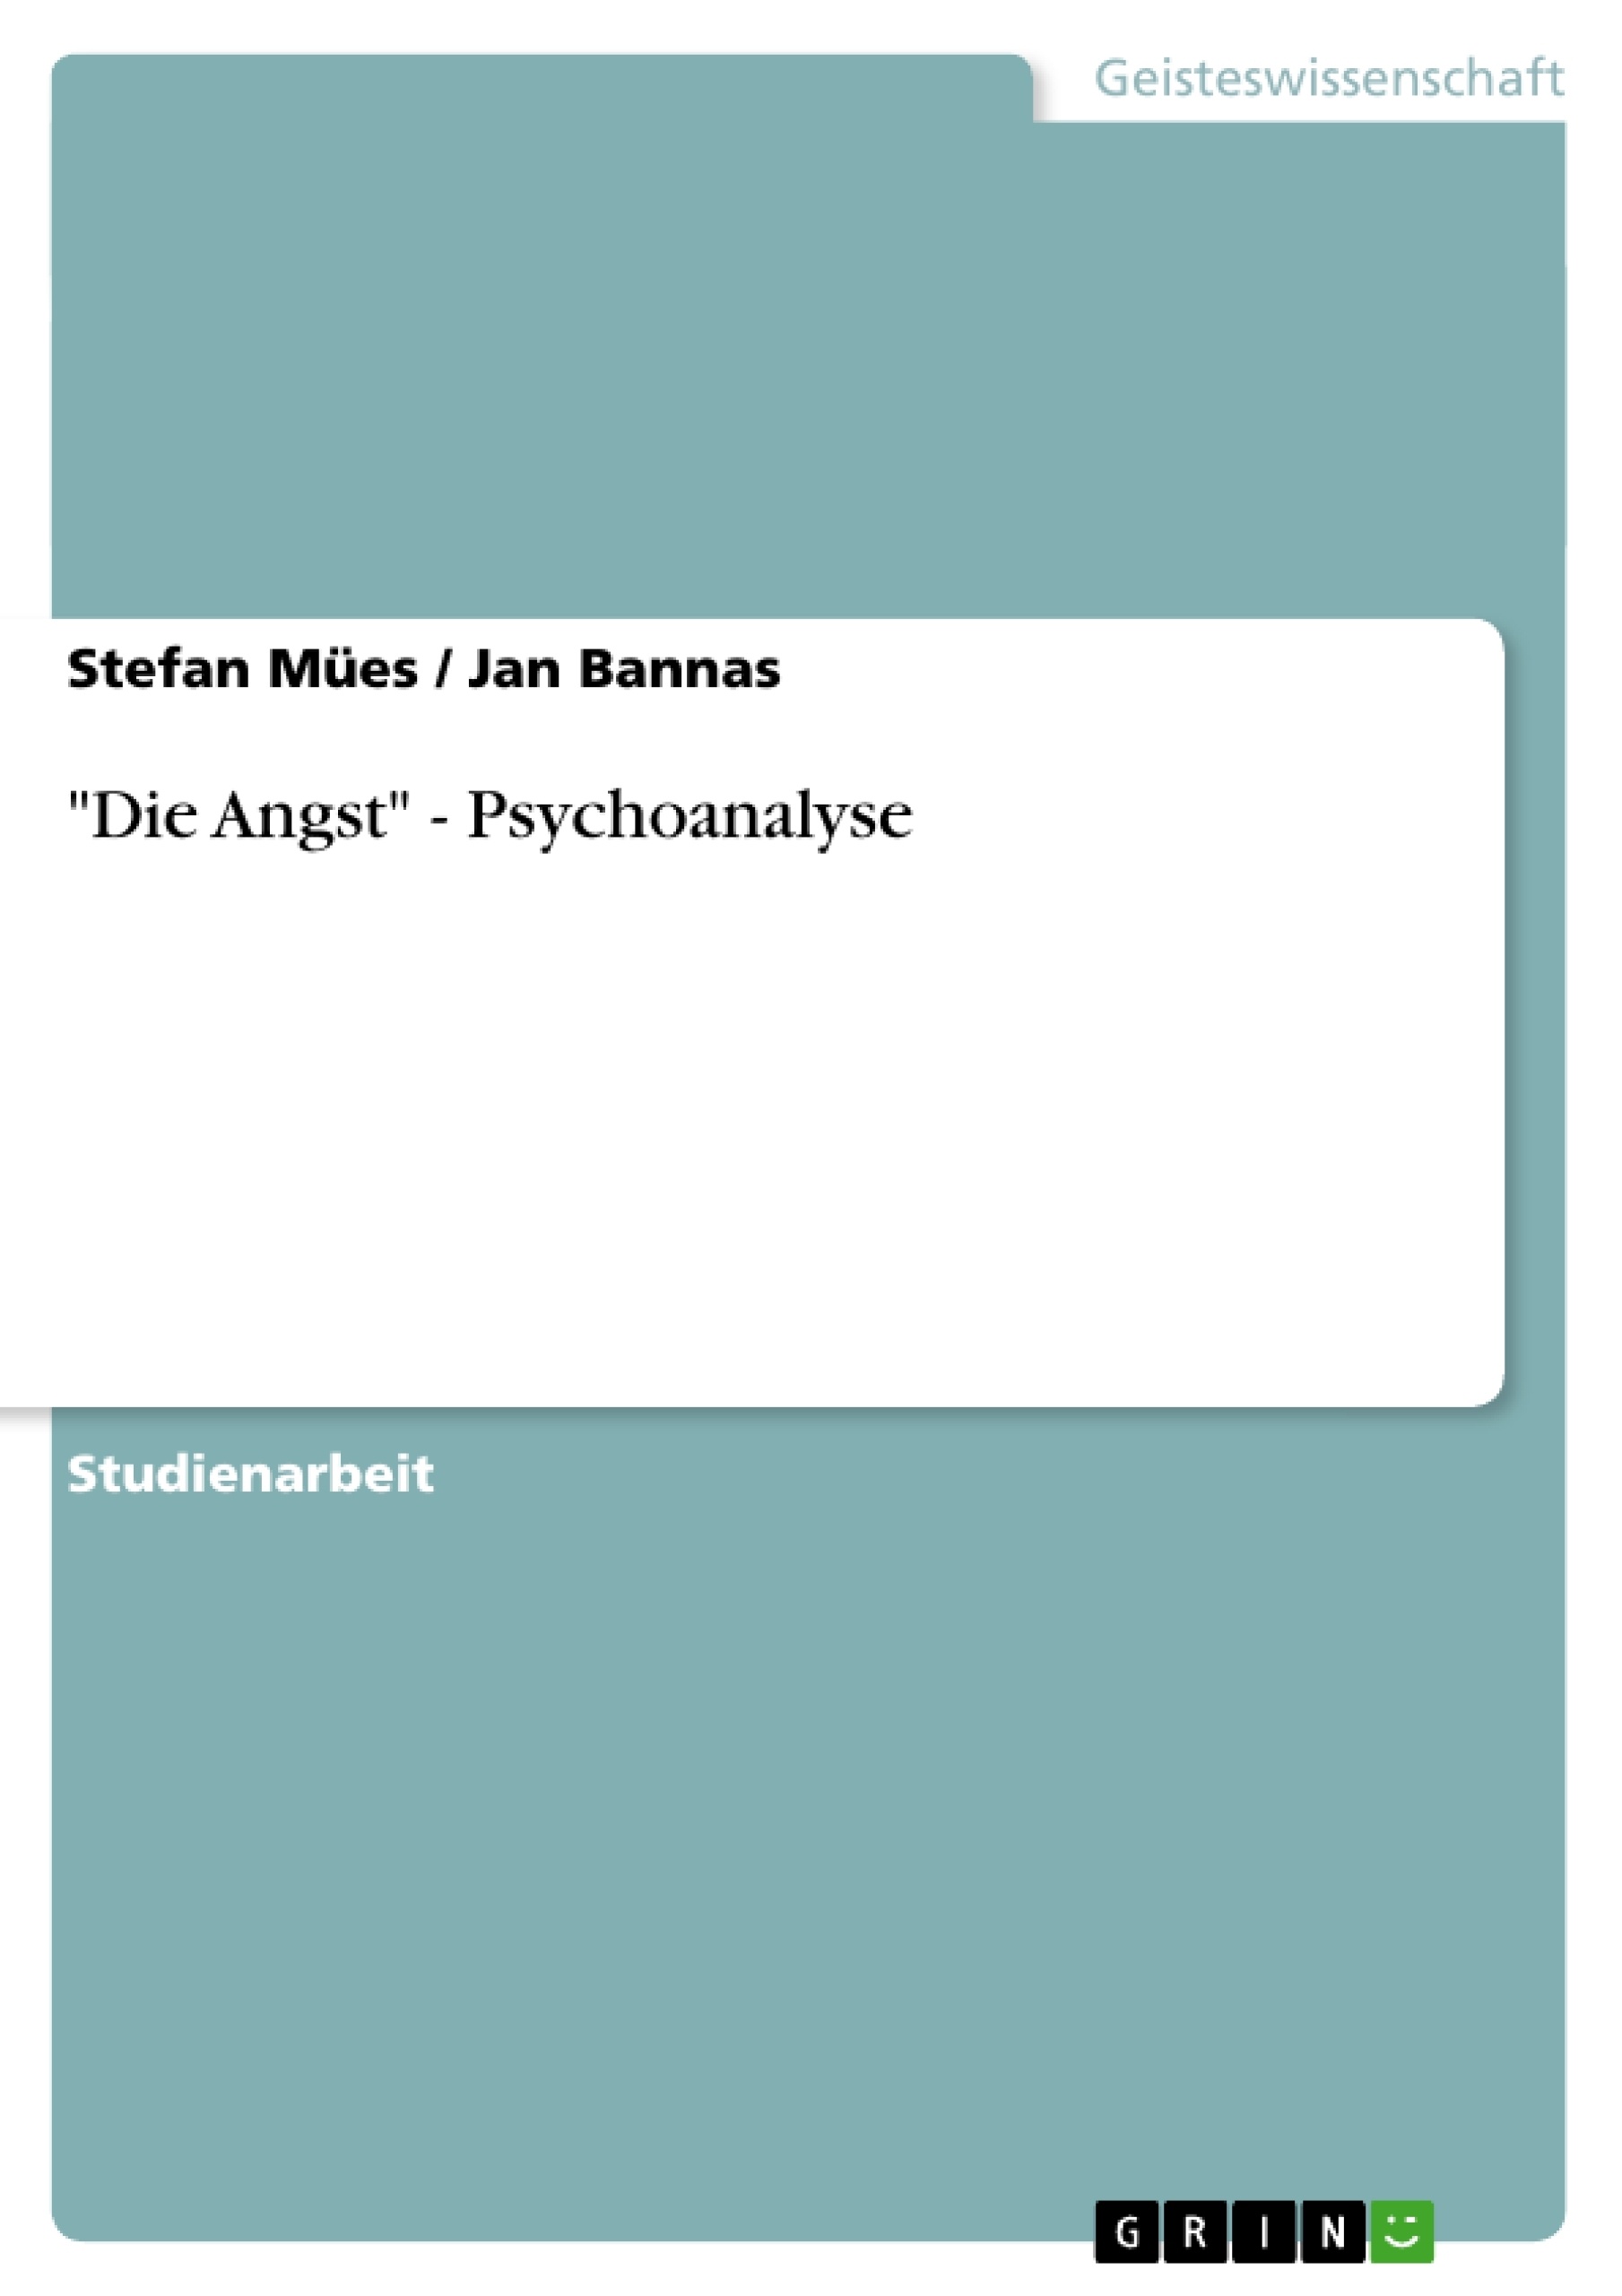 Title: "Die Angst" - Psychoanalyse